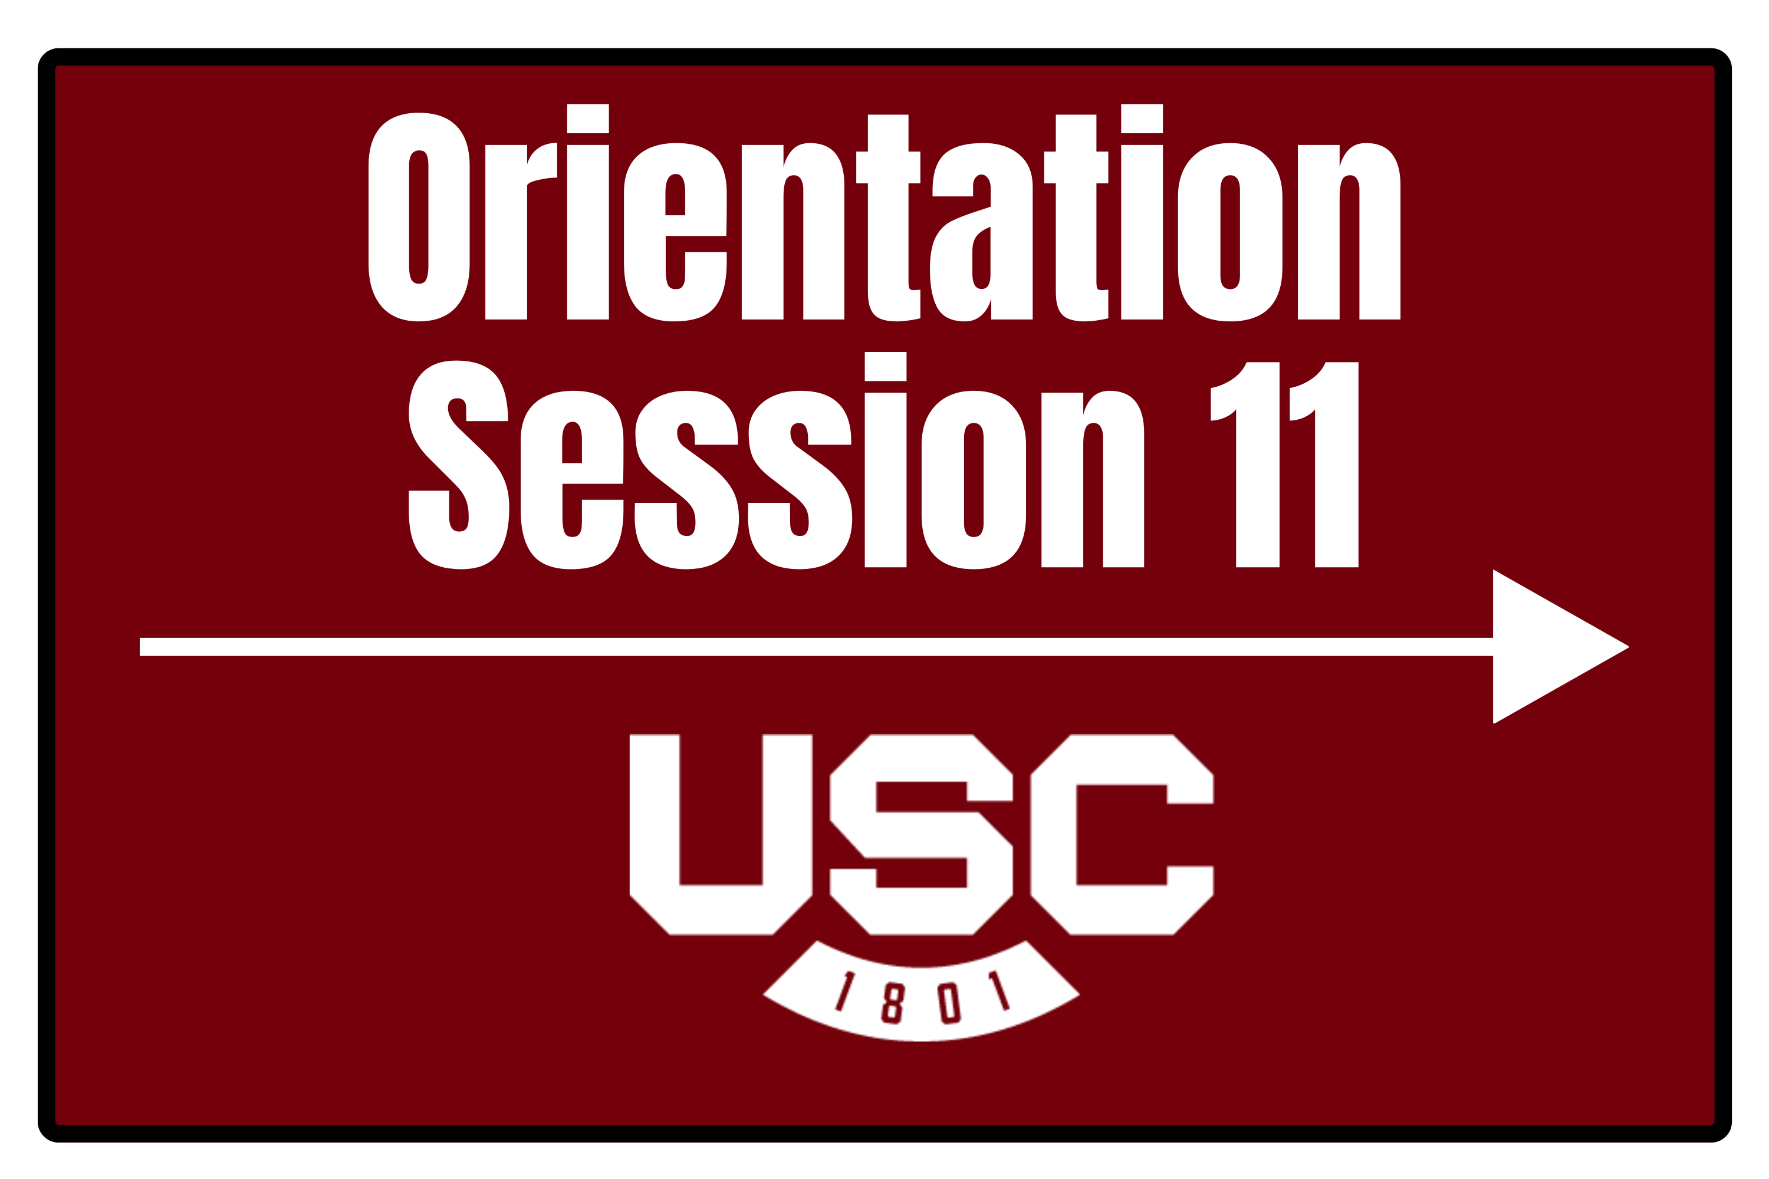 Orientation Session 11: July 1 - 2